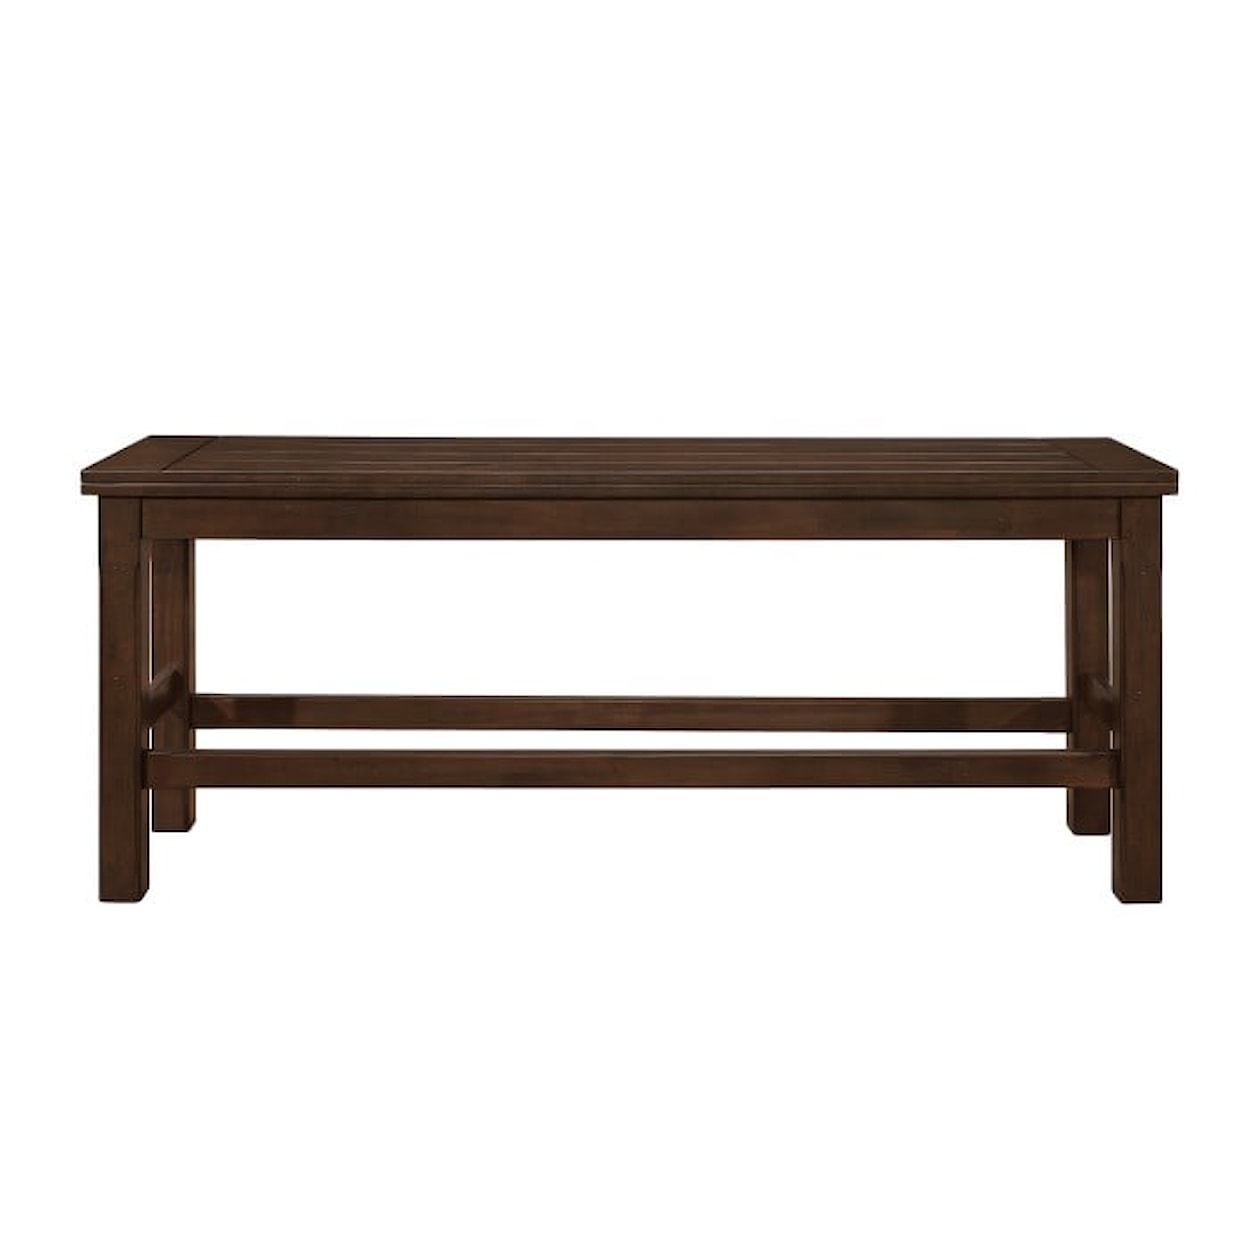 Homelegance Furniture Schleiger Counter Height Bench